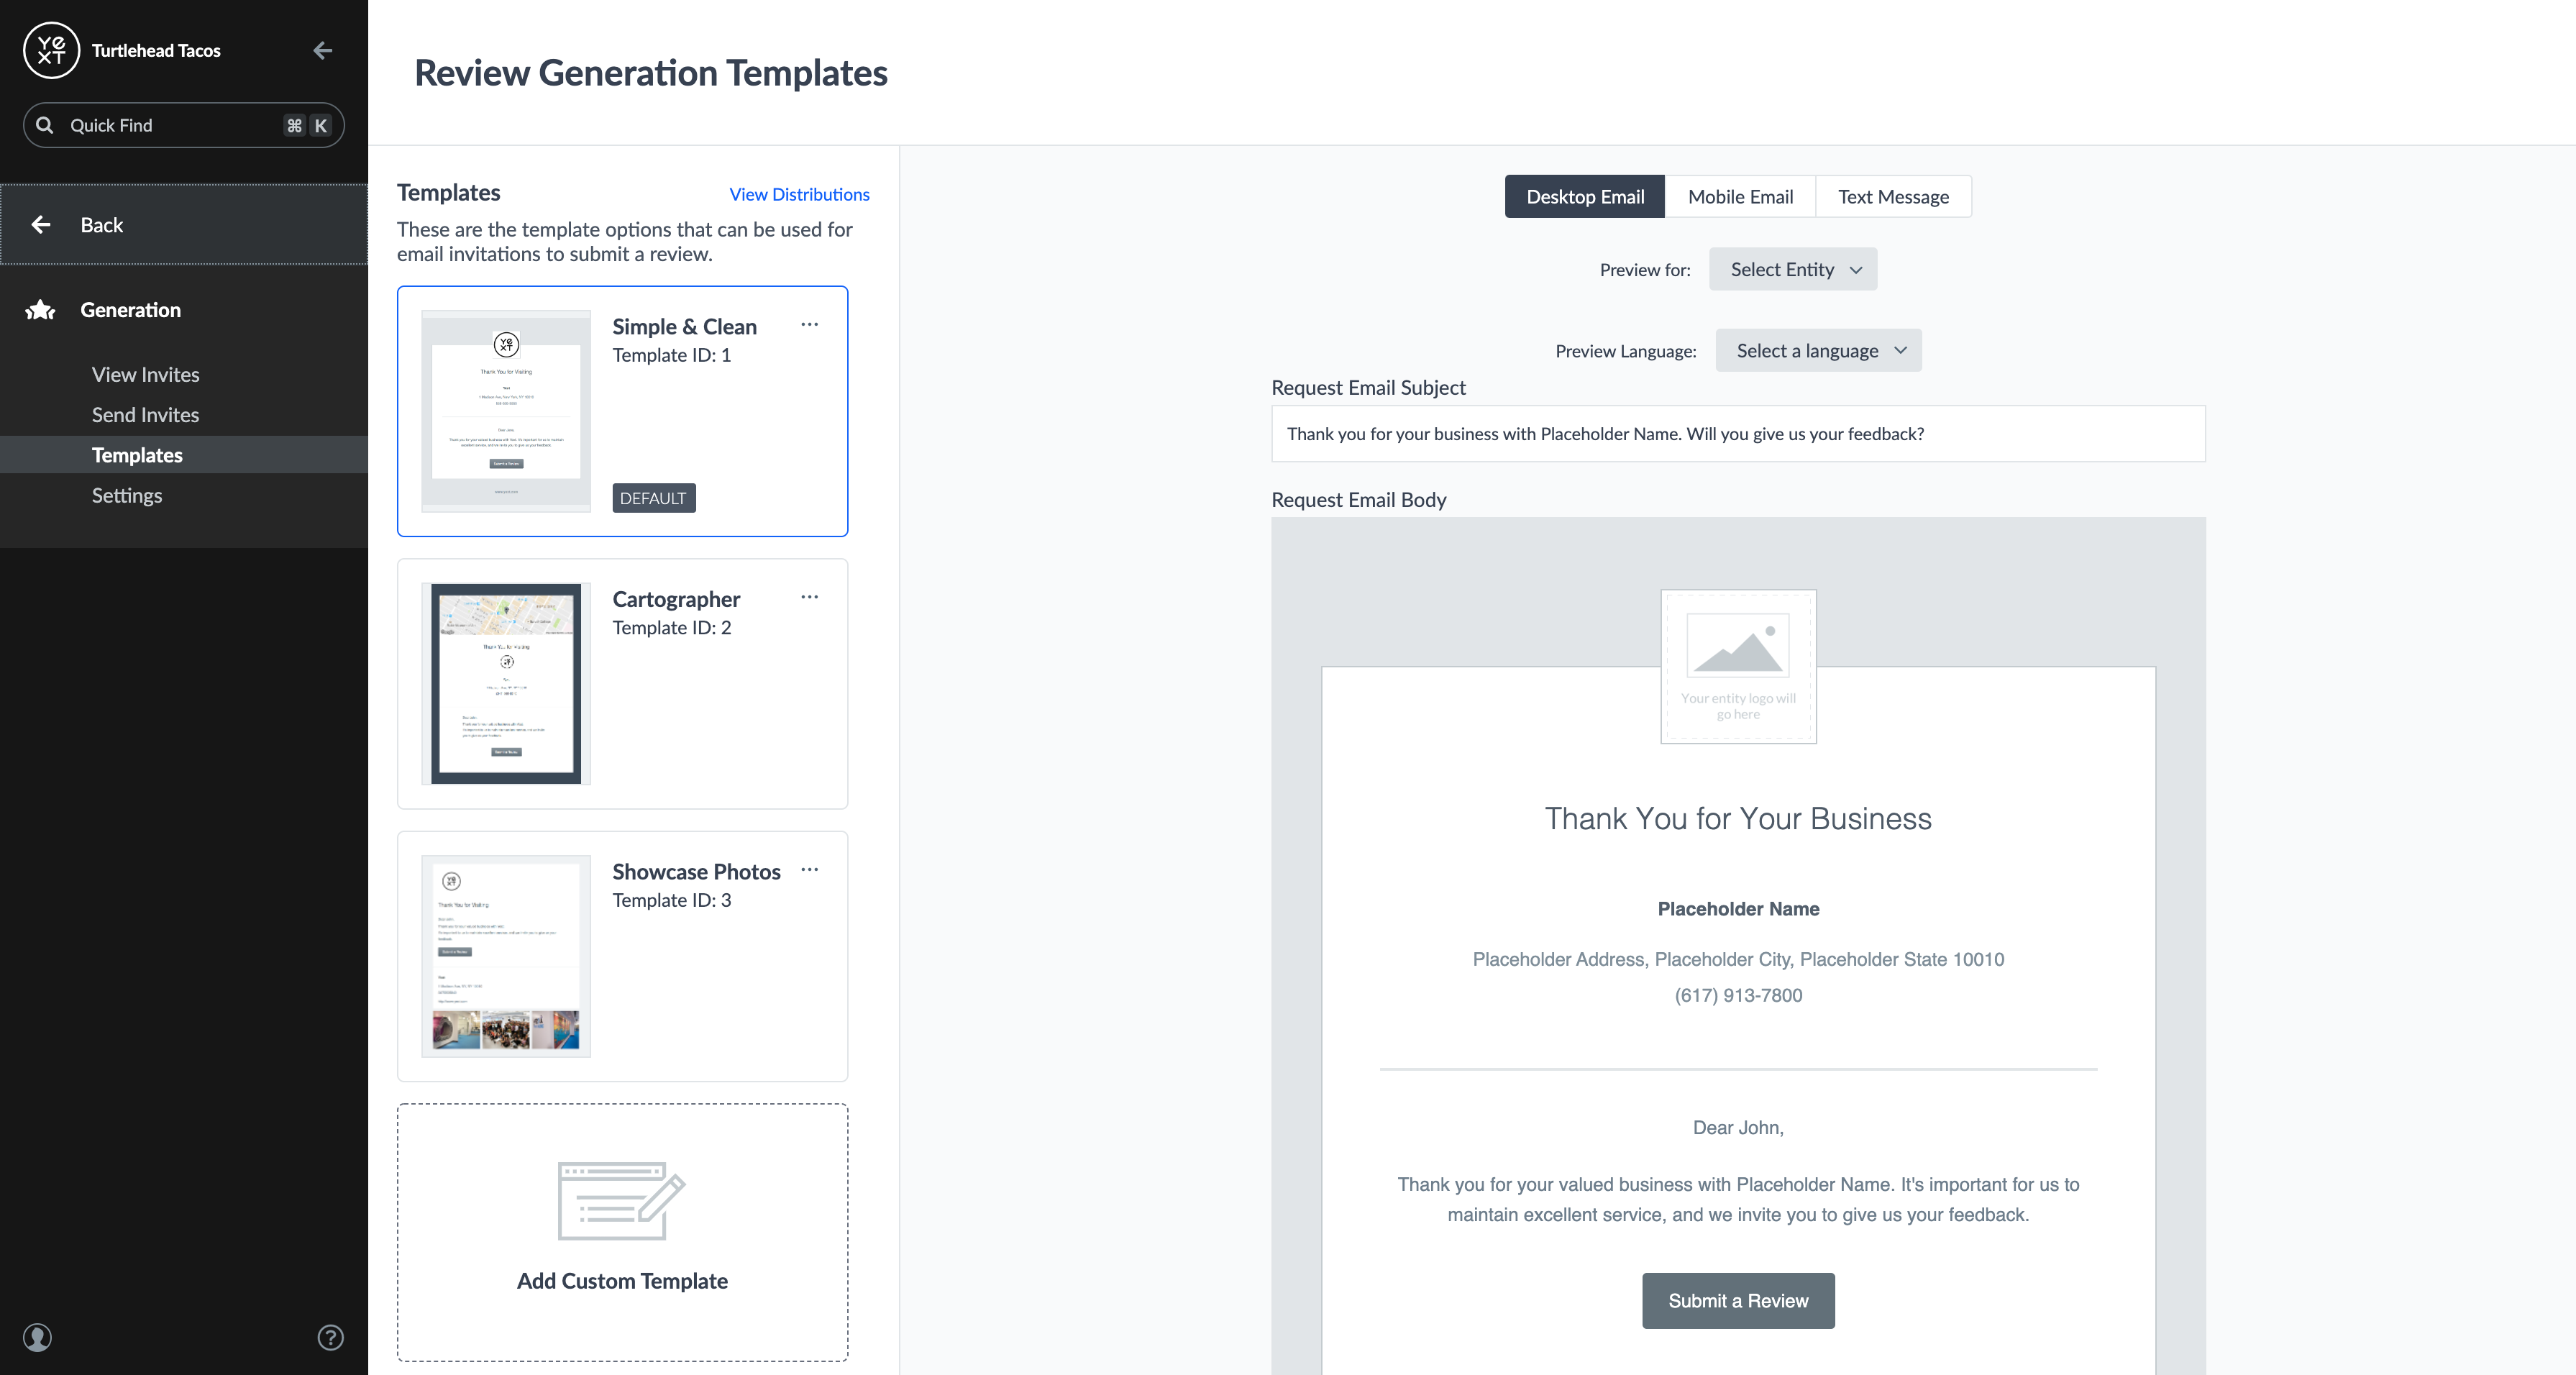 Configure review generation invitation templates